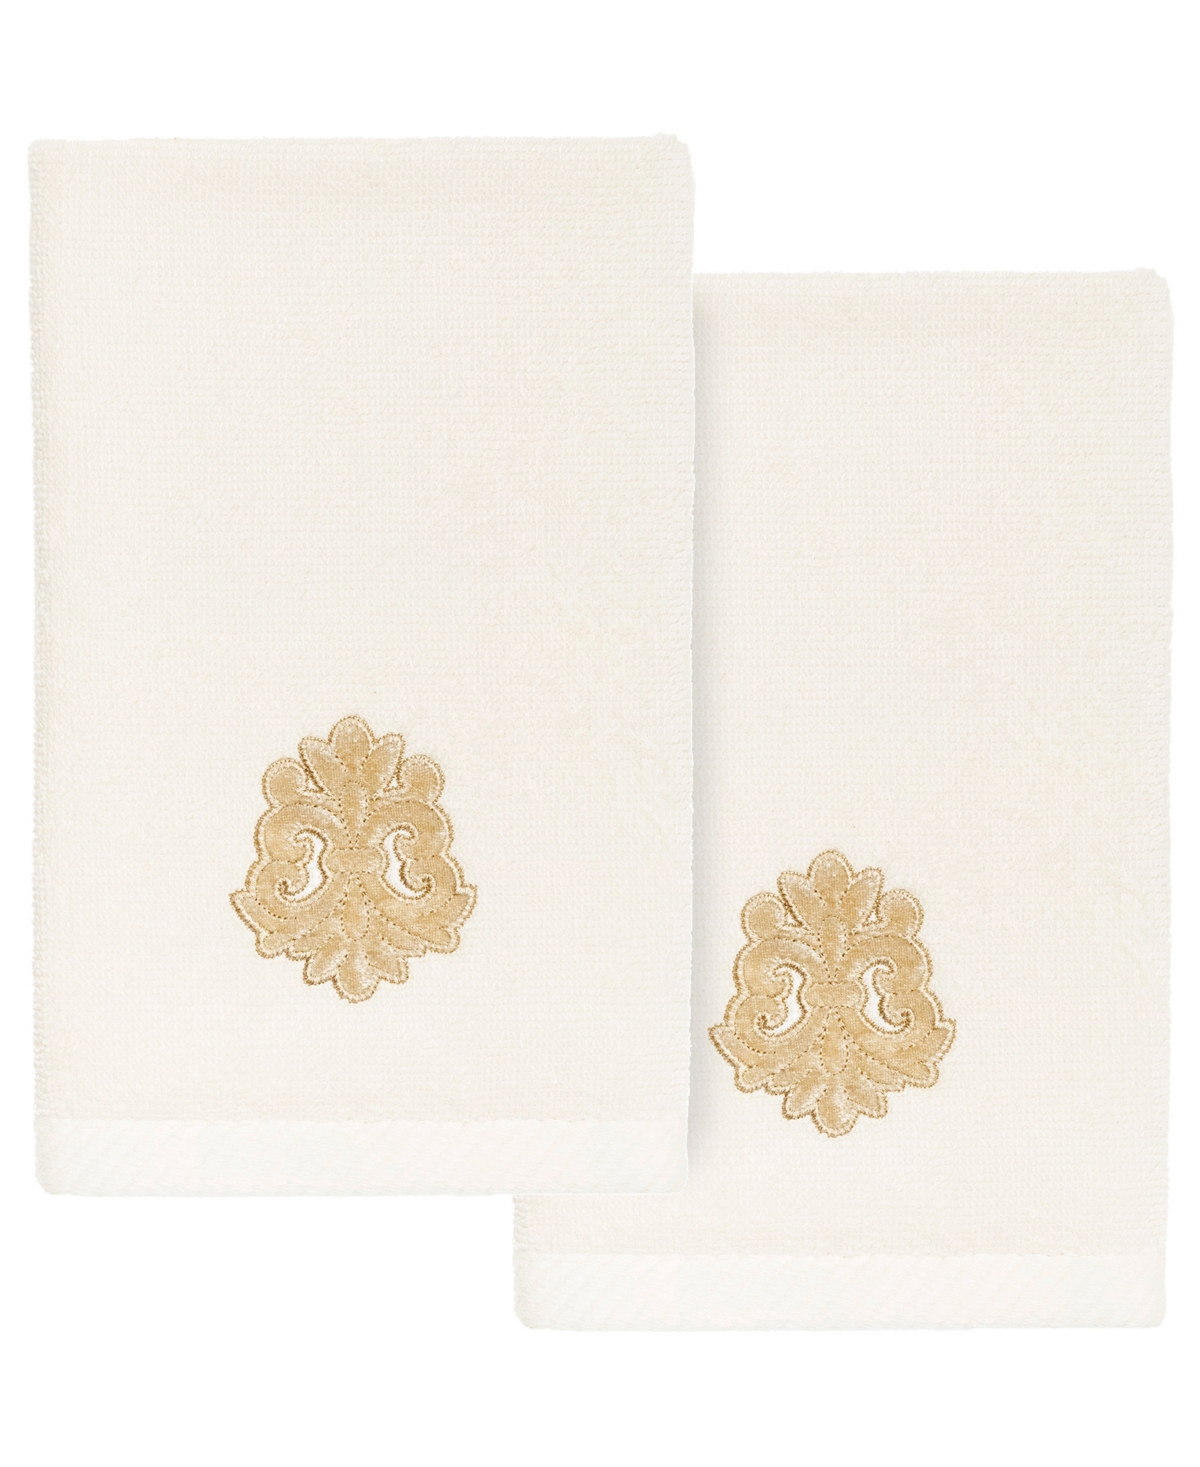 Linum Home Textiles Turkish Cotton May Embellished Fingertip Towel Set, 2 Piece Bedding In Beige